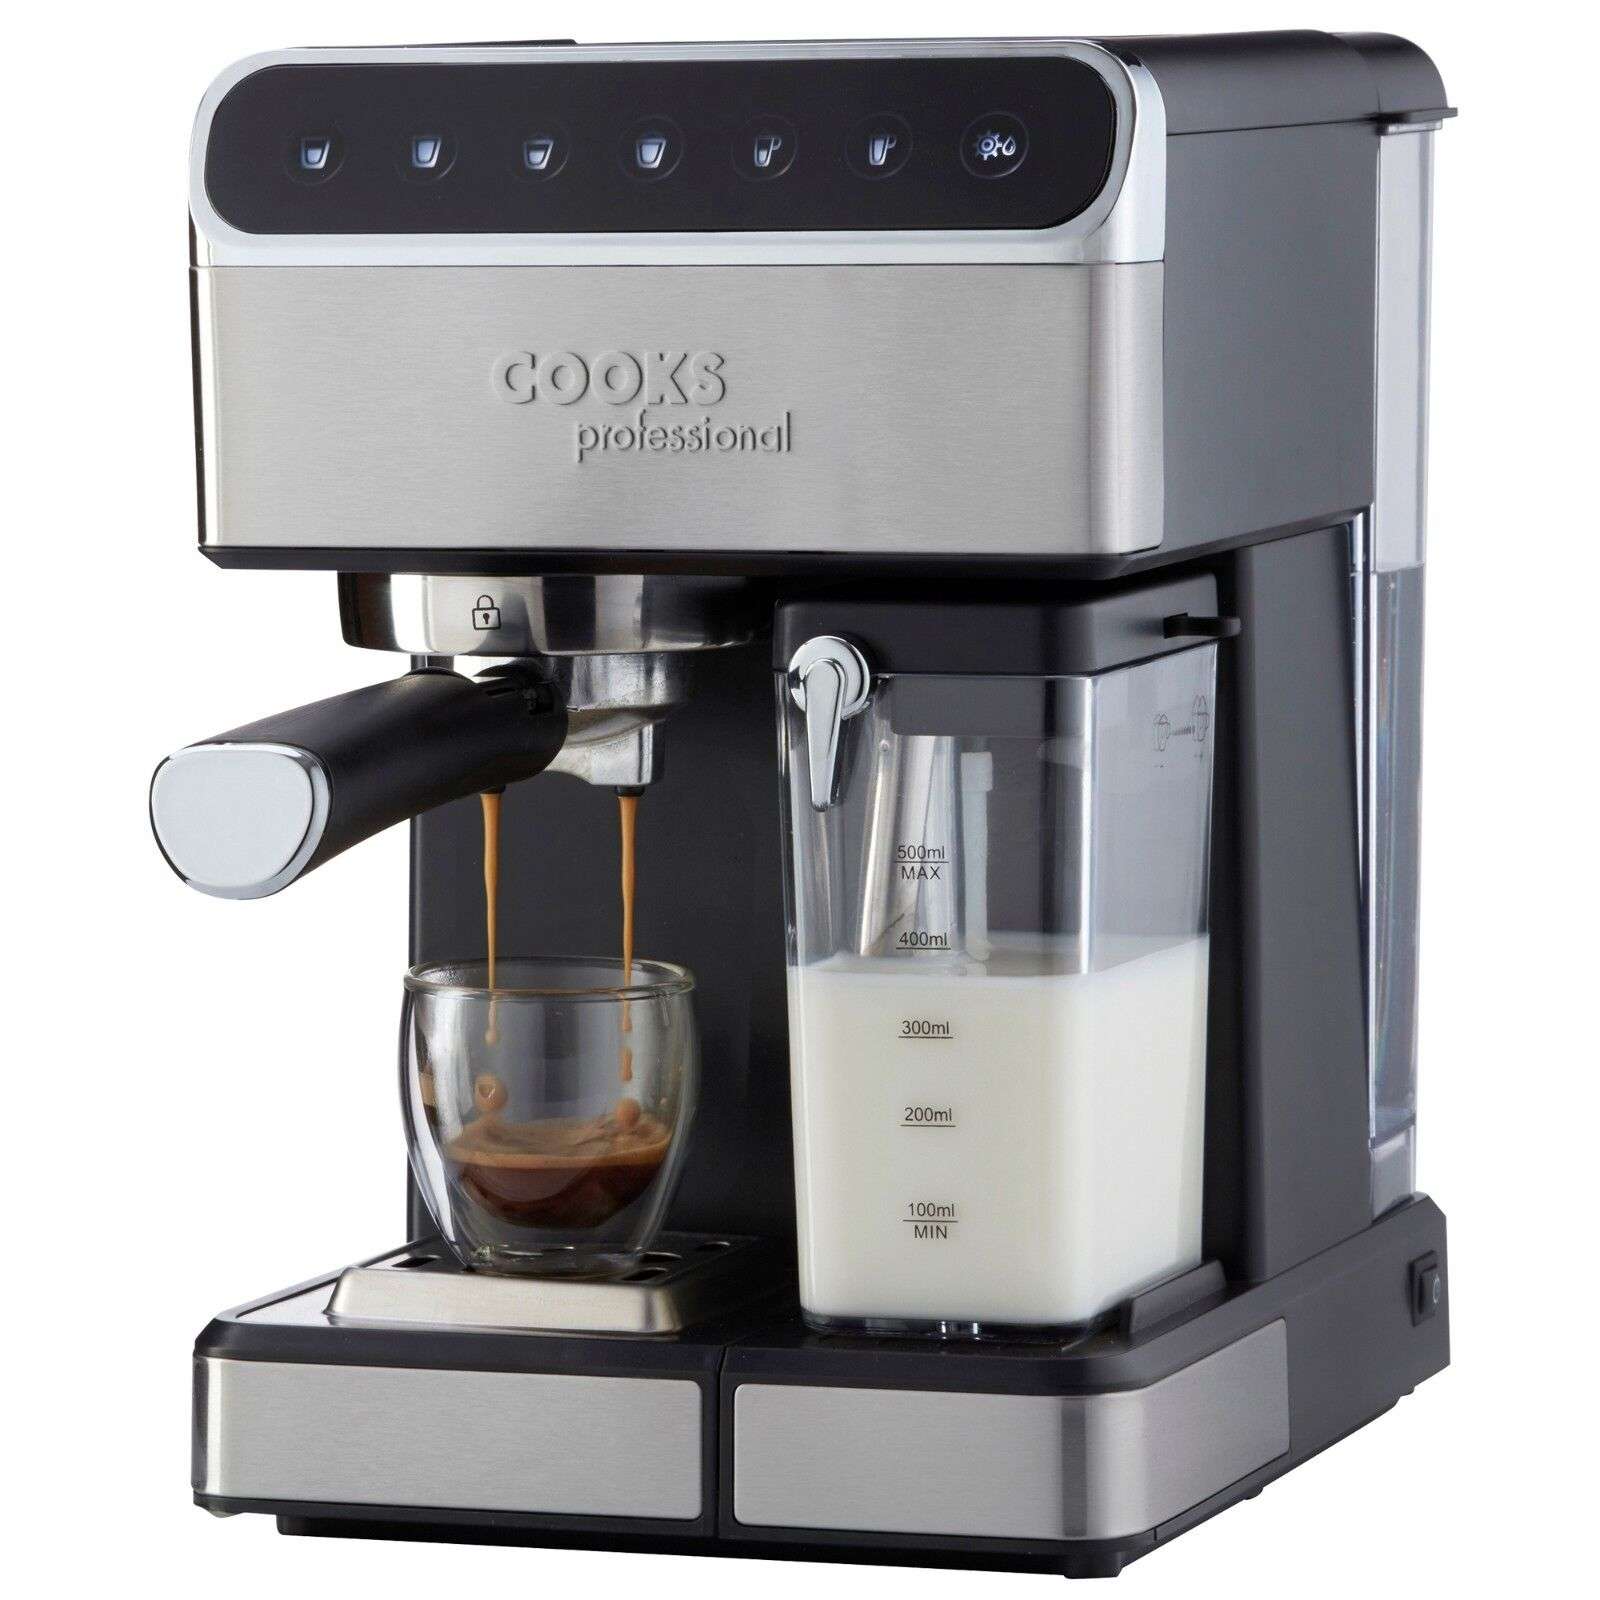 Cooks Professional Espresso Coffee Machine Maker 15 Bar Digital Barista ...